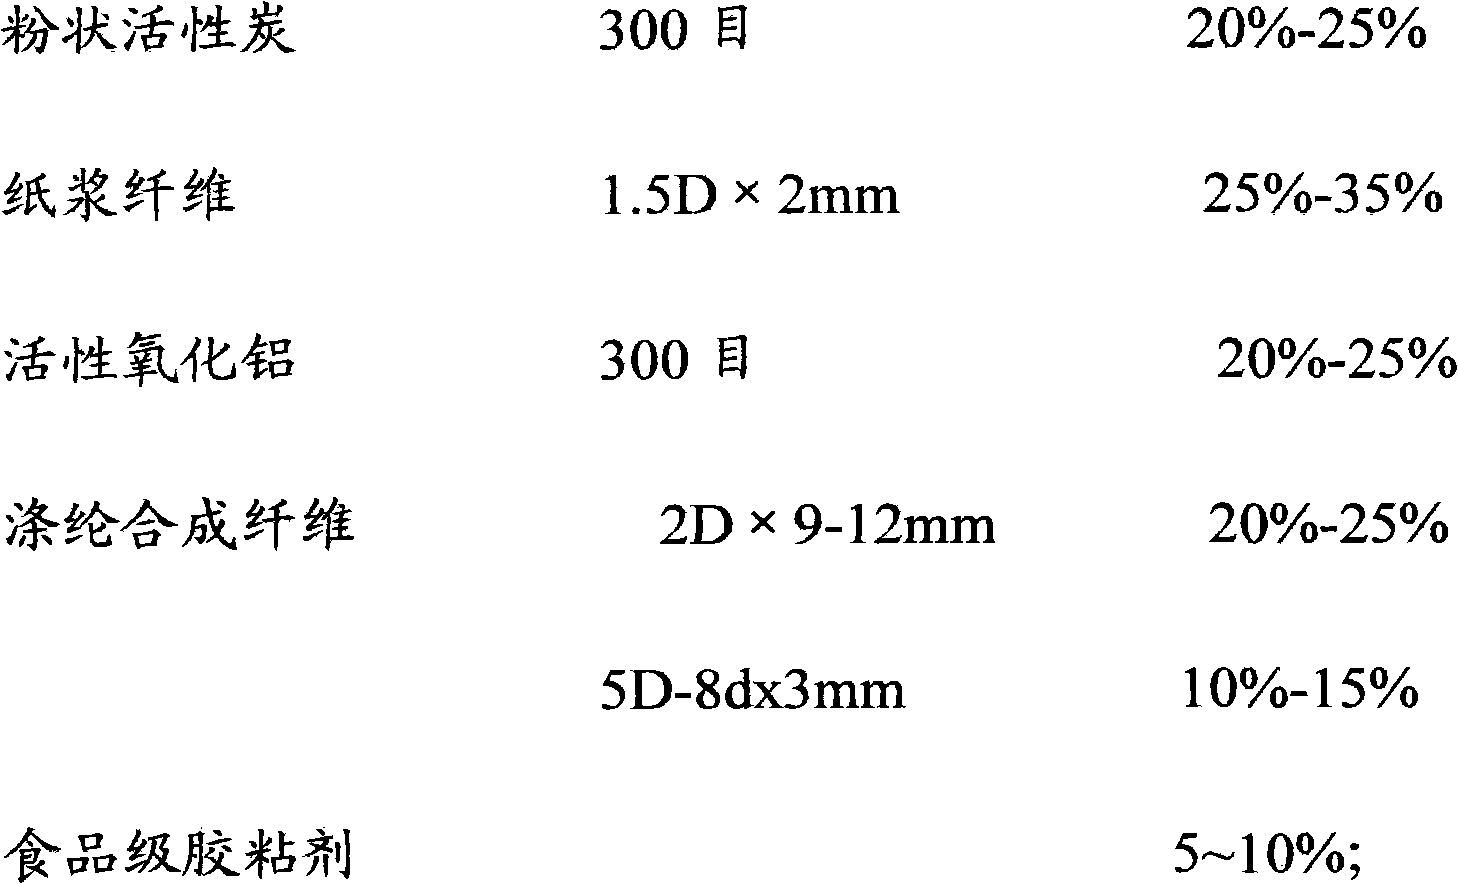 Preparation method of filtering adsorption paper